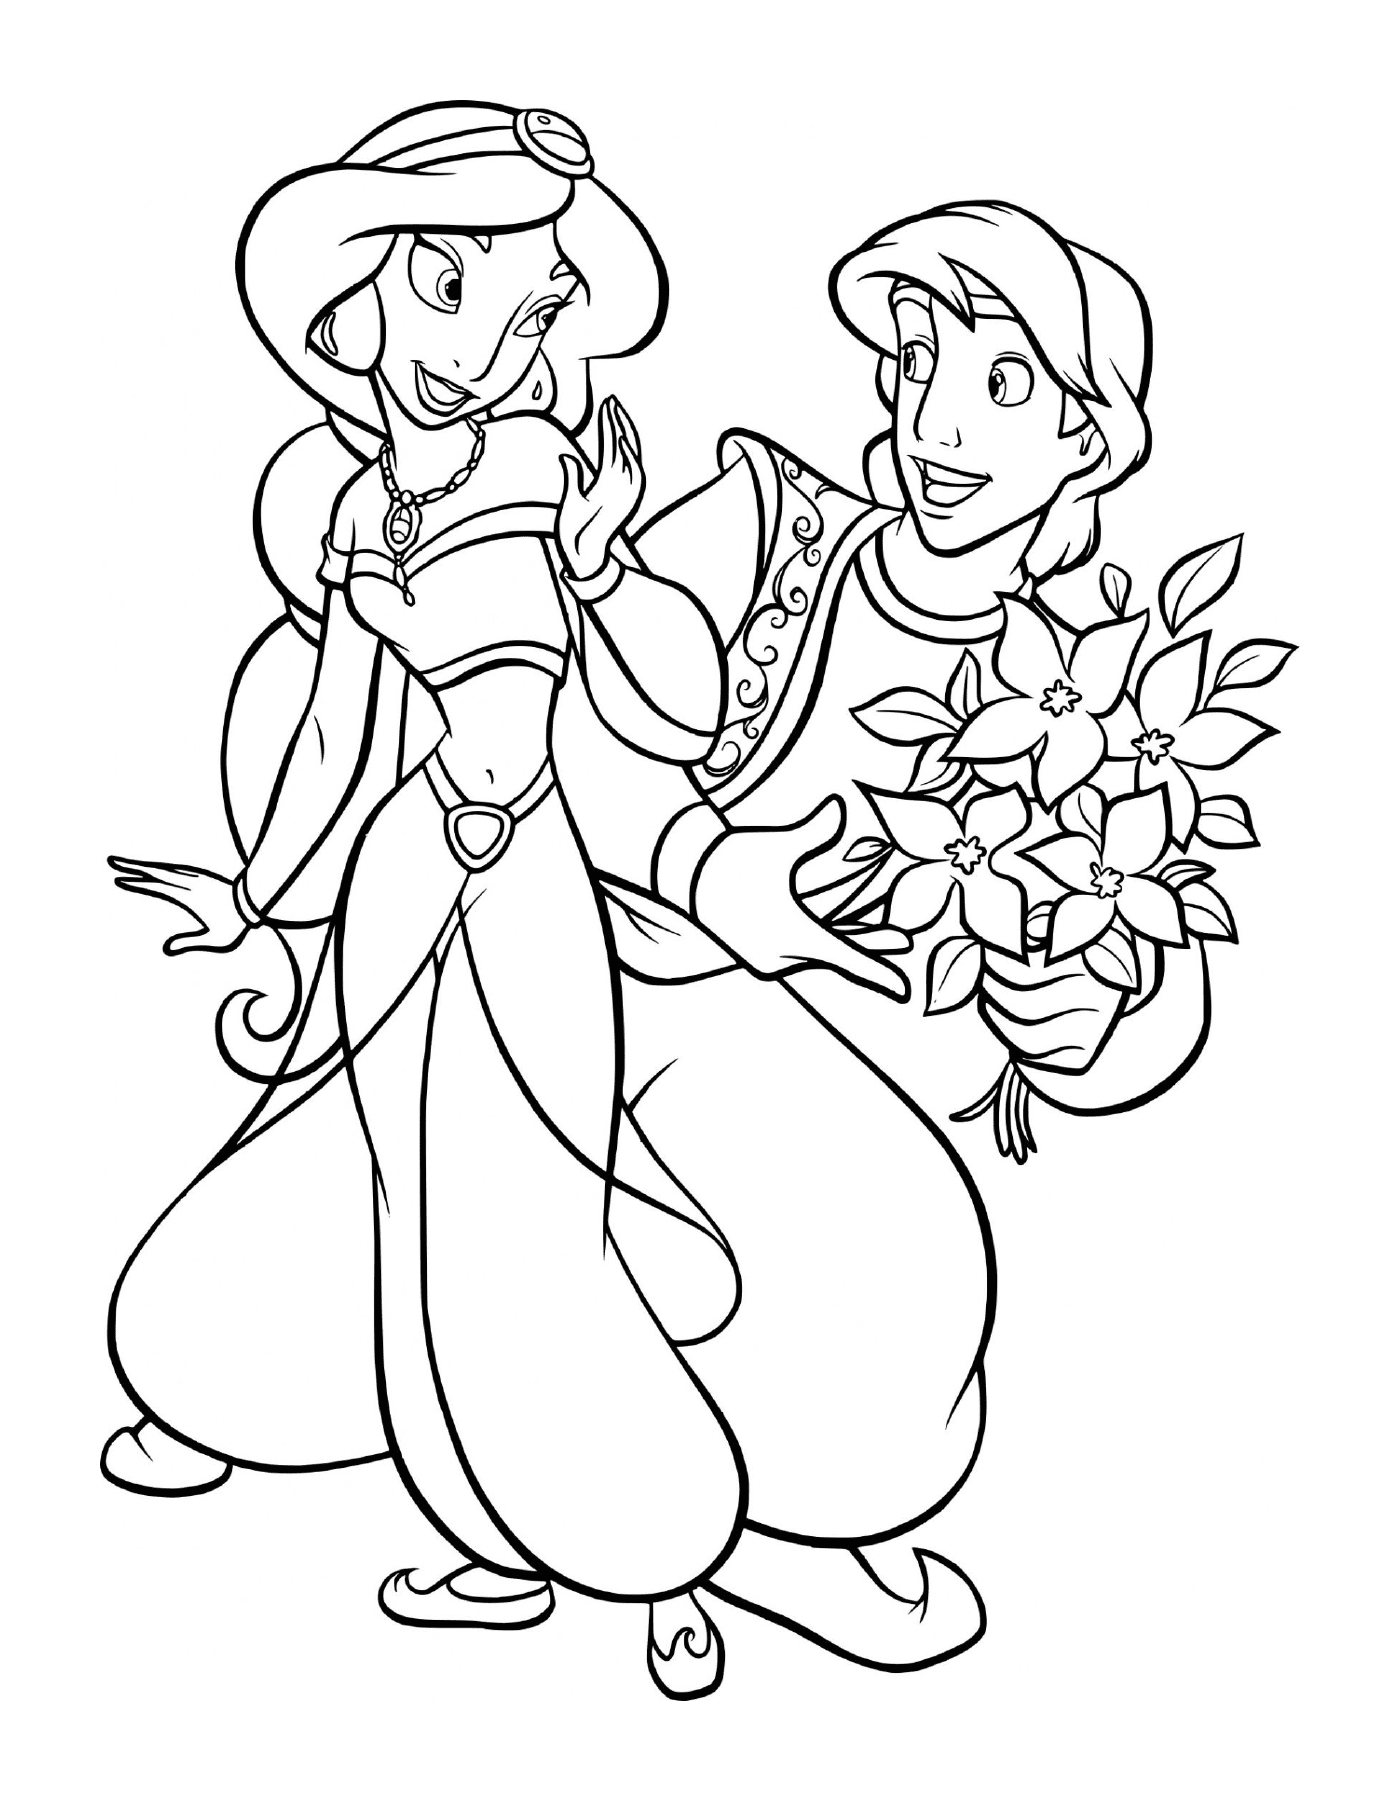   Aladdin offrant des fleurs roses à la princesse Jasmine 